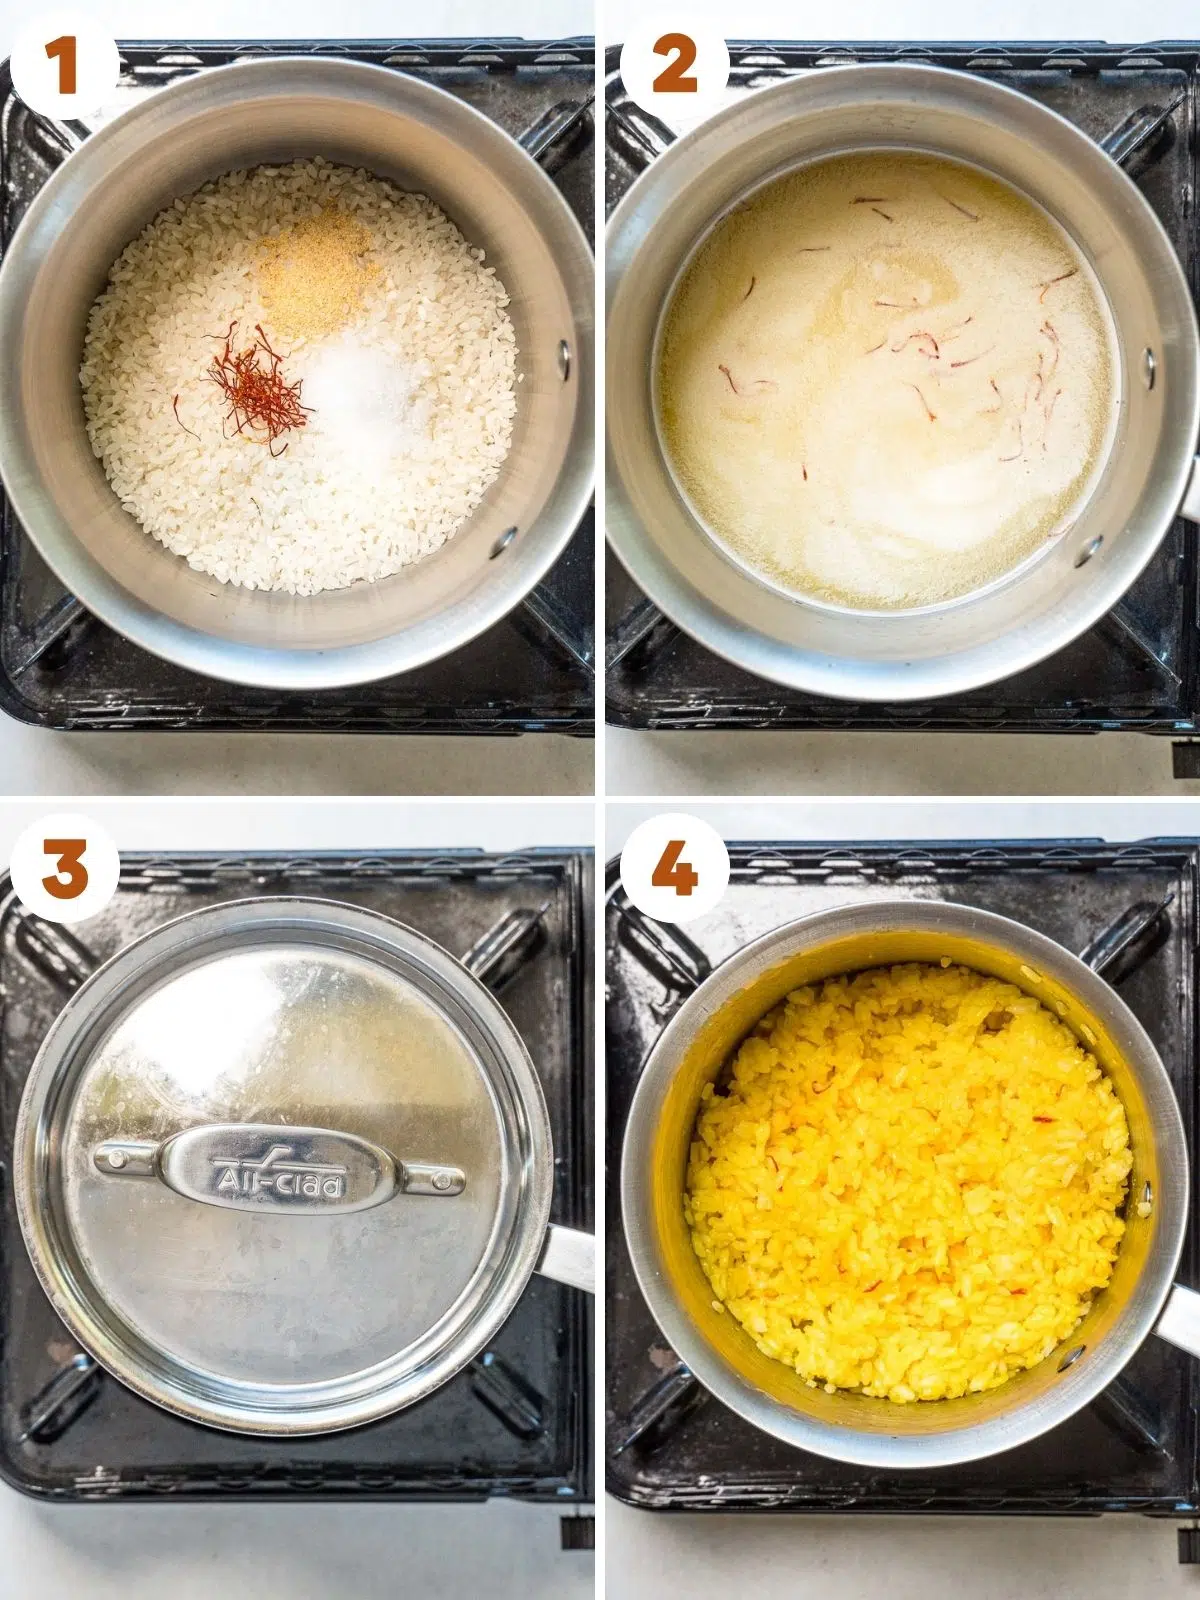 Steps to make saffron rice